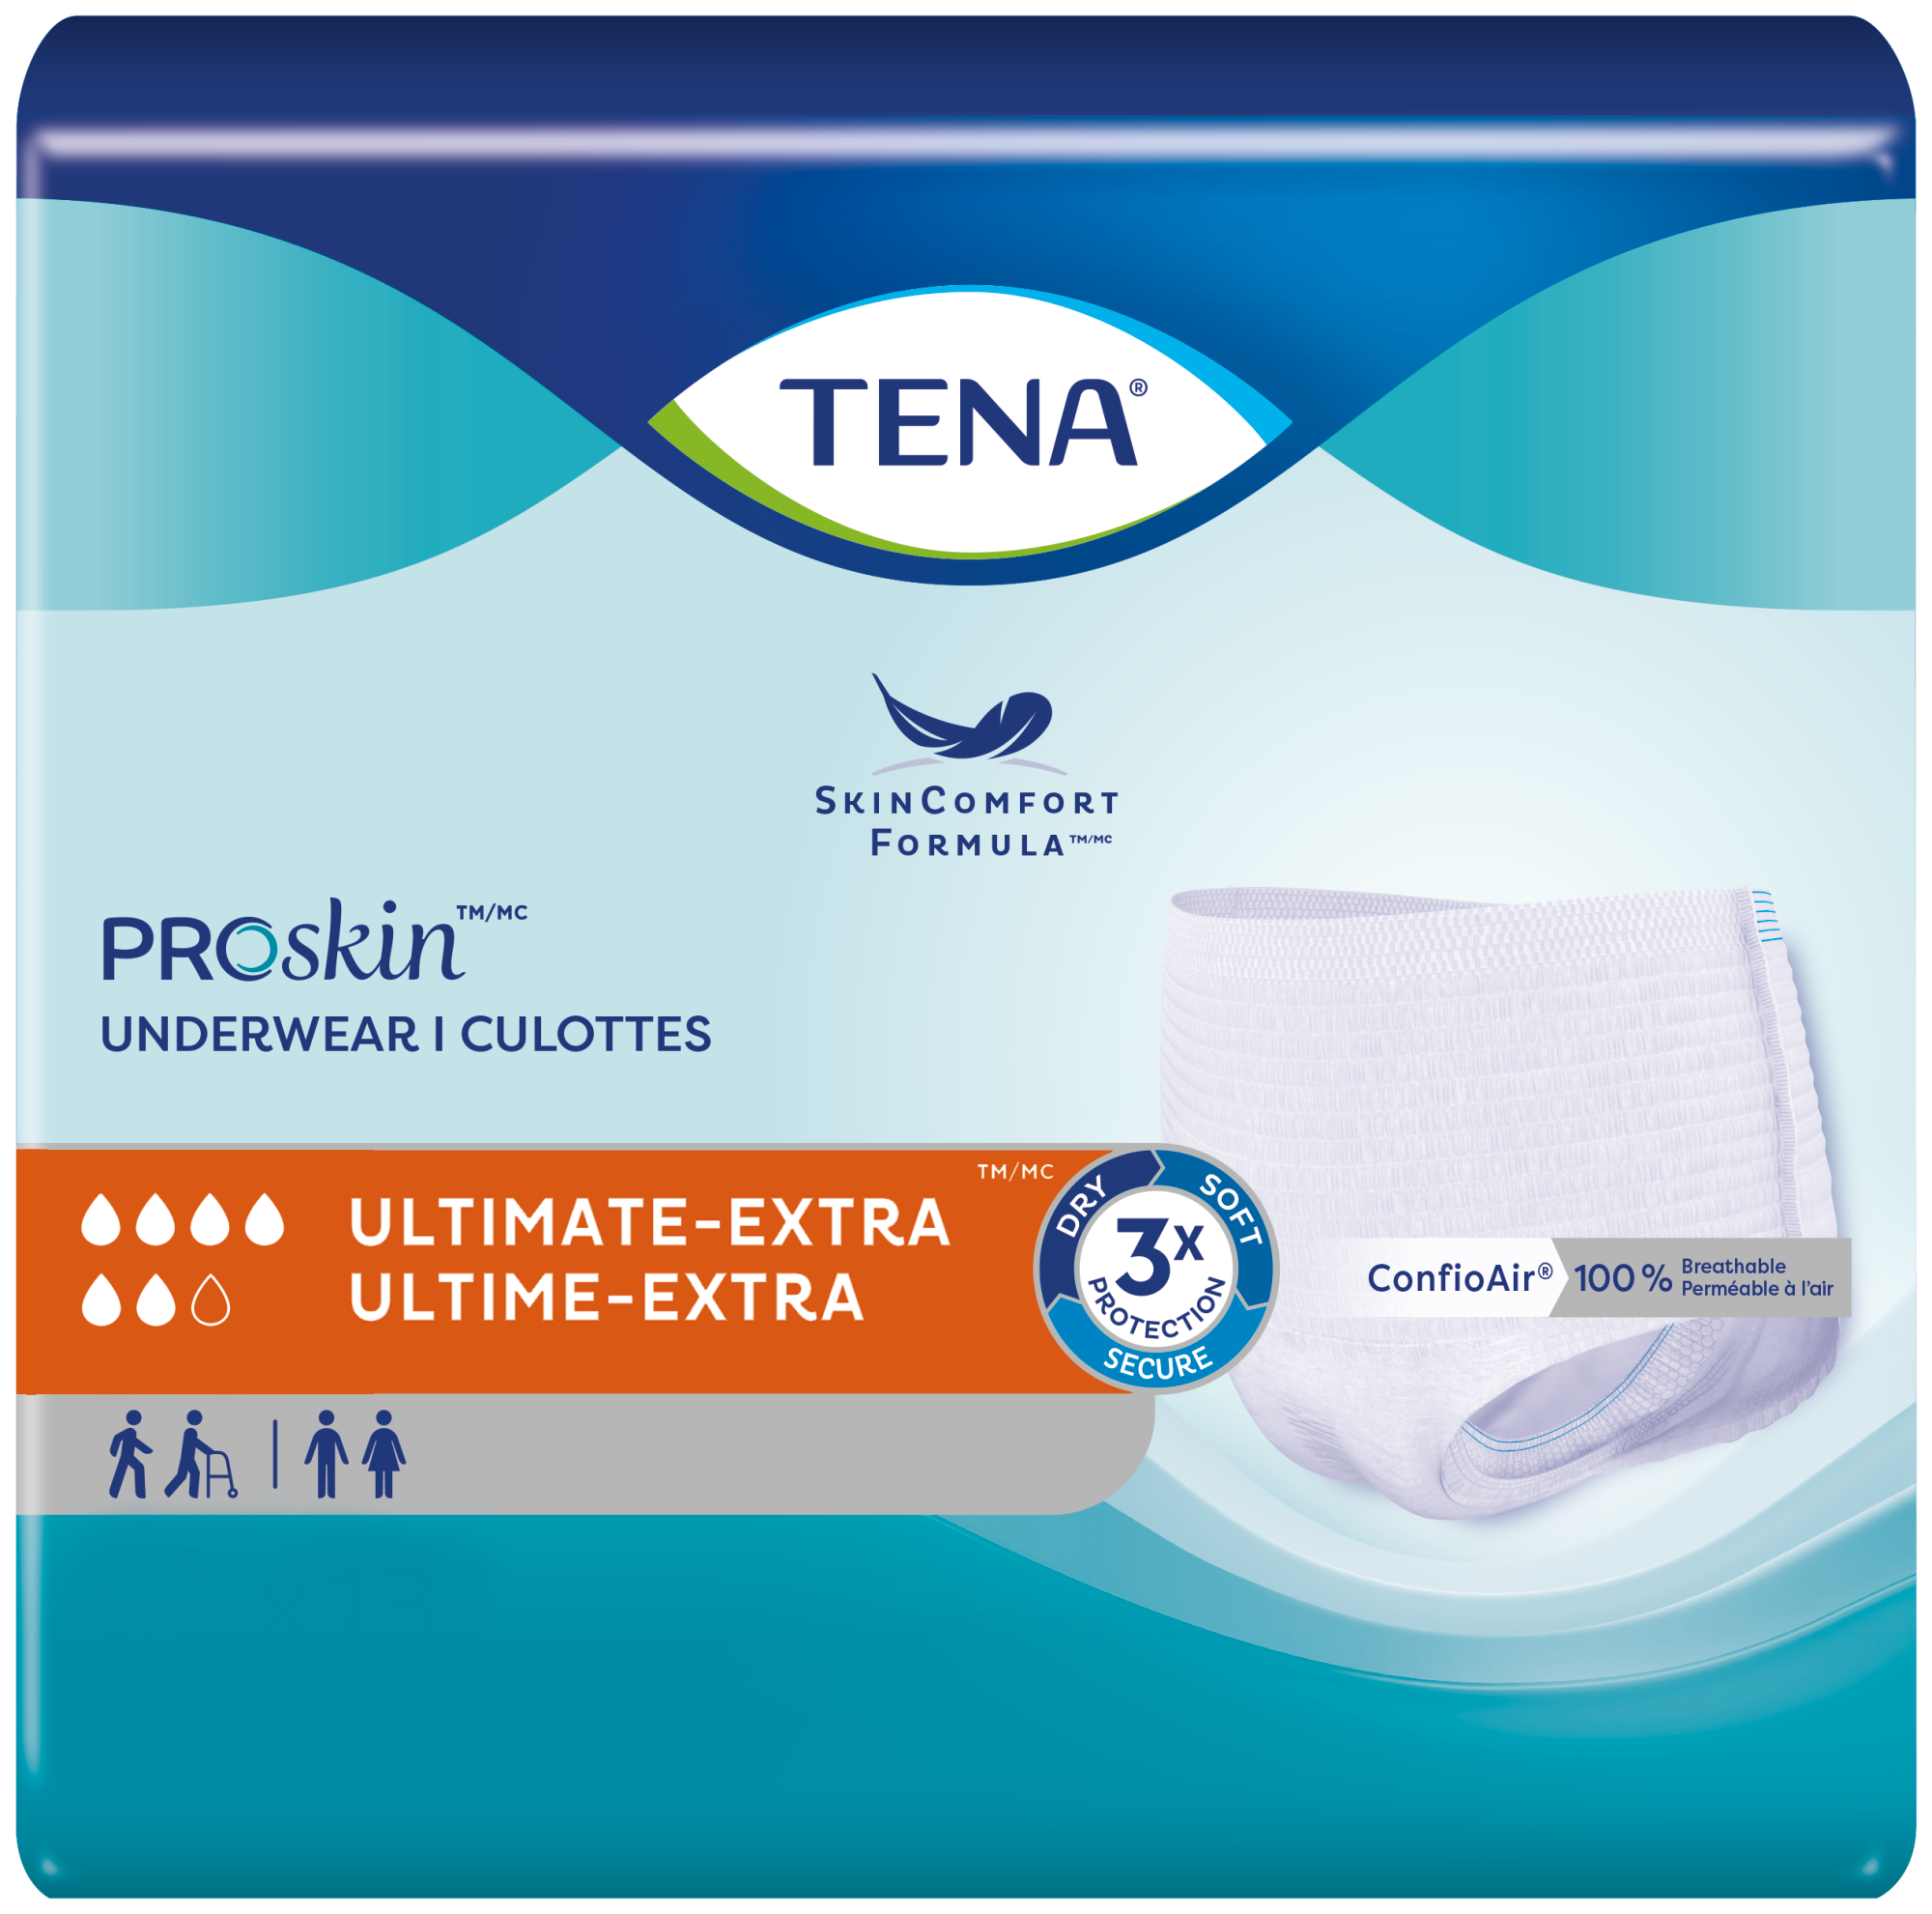 TENA Sensitive Care Extra Coverage Ultra Thin Light